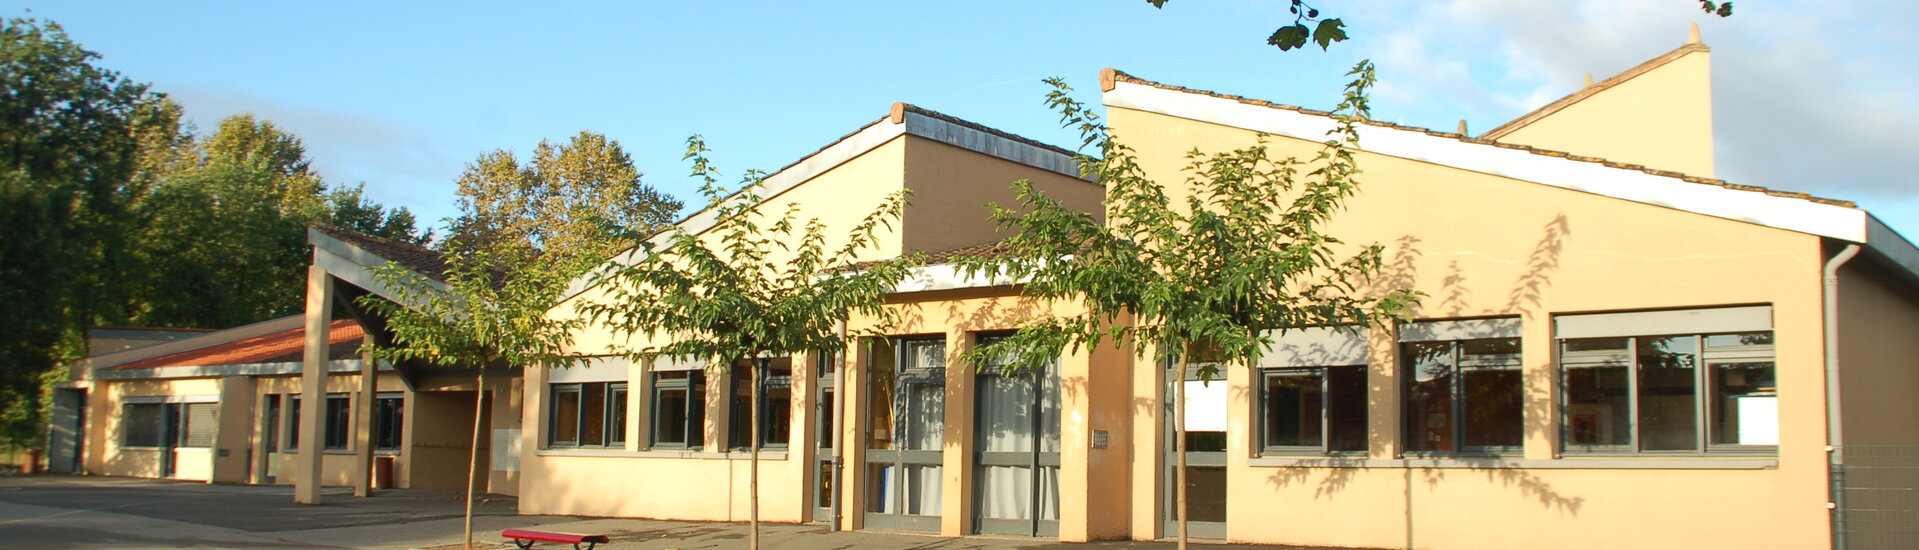 Mairie Albias Tarifs Communaux Tarn-et-Garonne